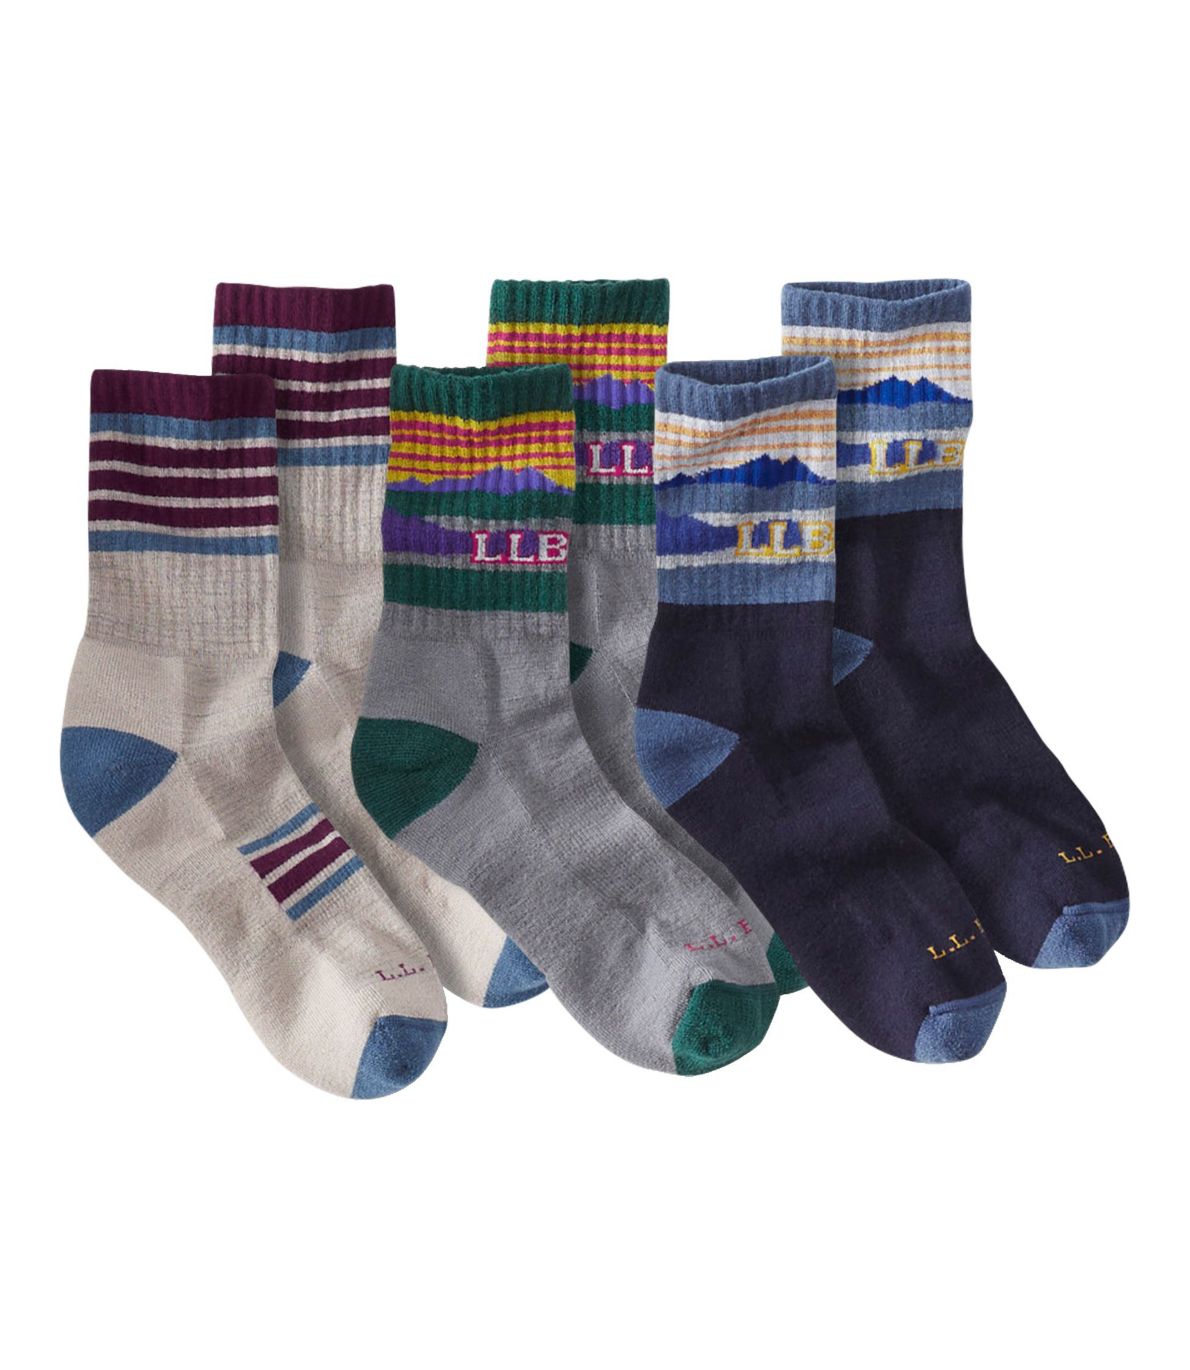 Men's Katahdin Hiker Socks, Three-Pack